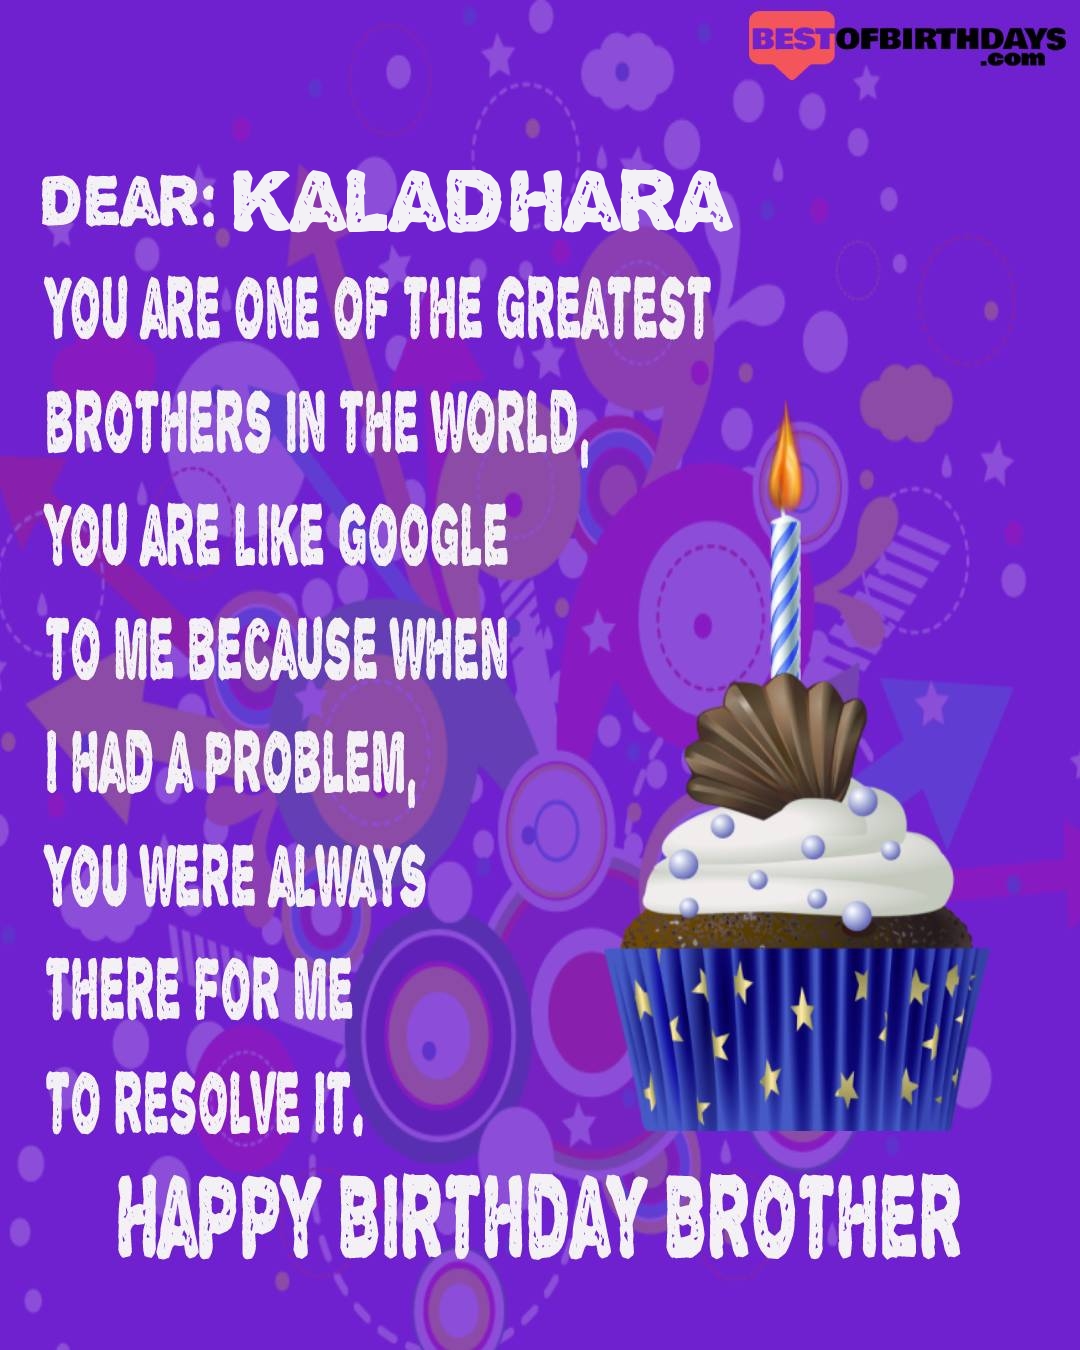 Happy birthday kaladhara bhai brother bro